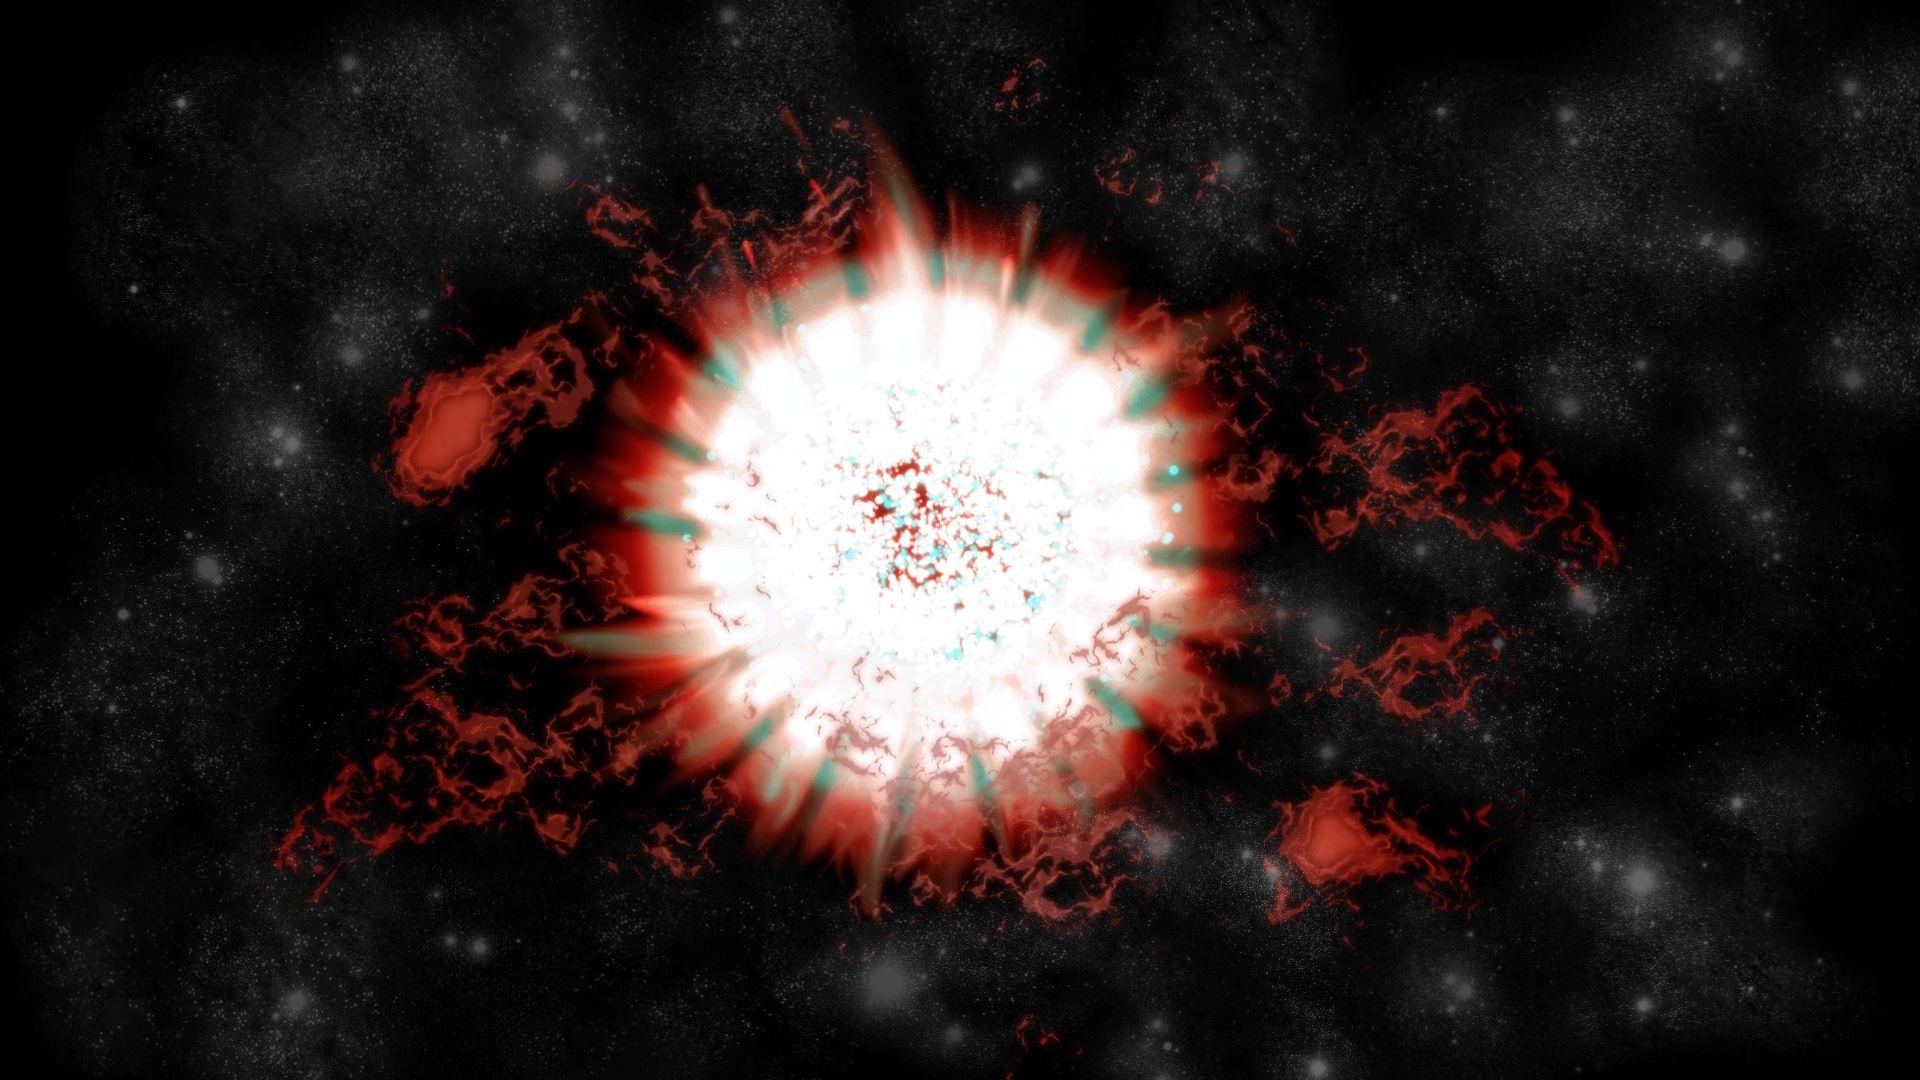 Beautiful Red Supernova Light Picture 5115 Wallpaper